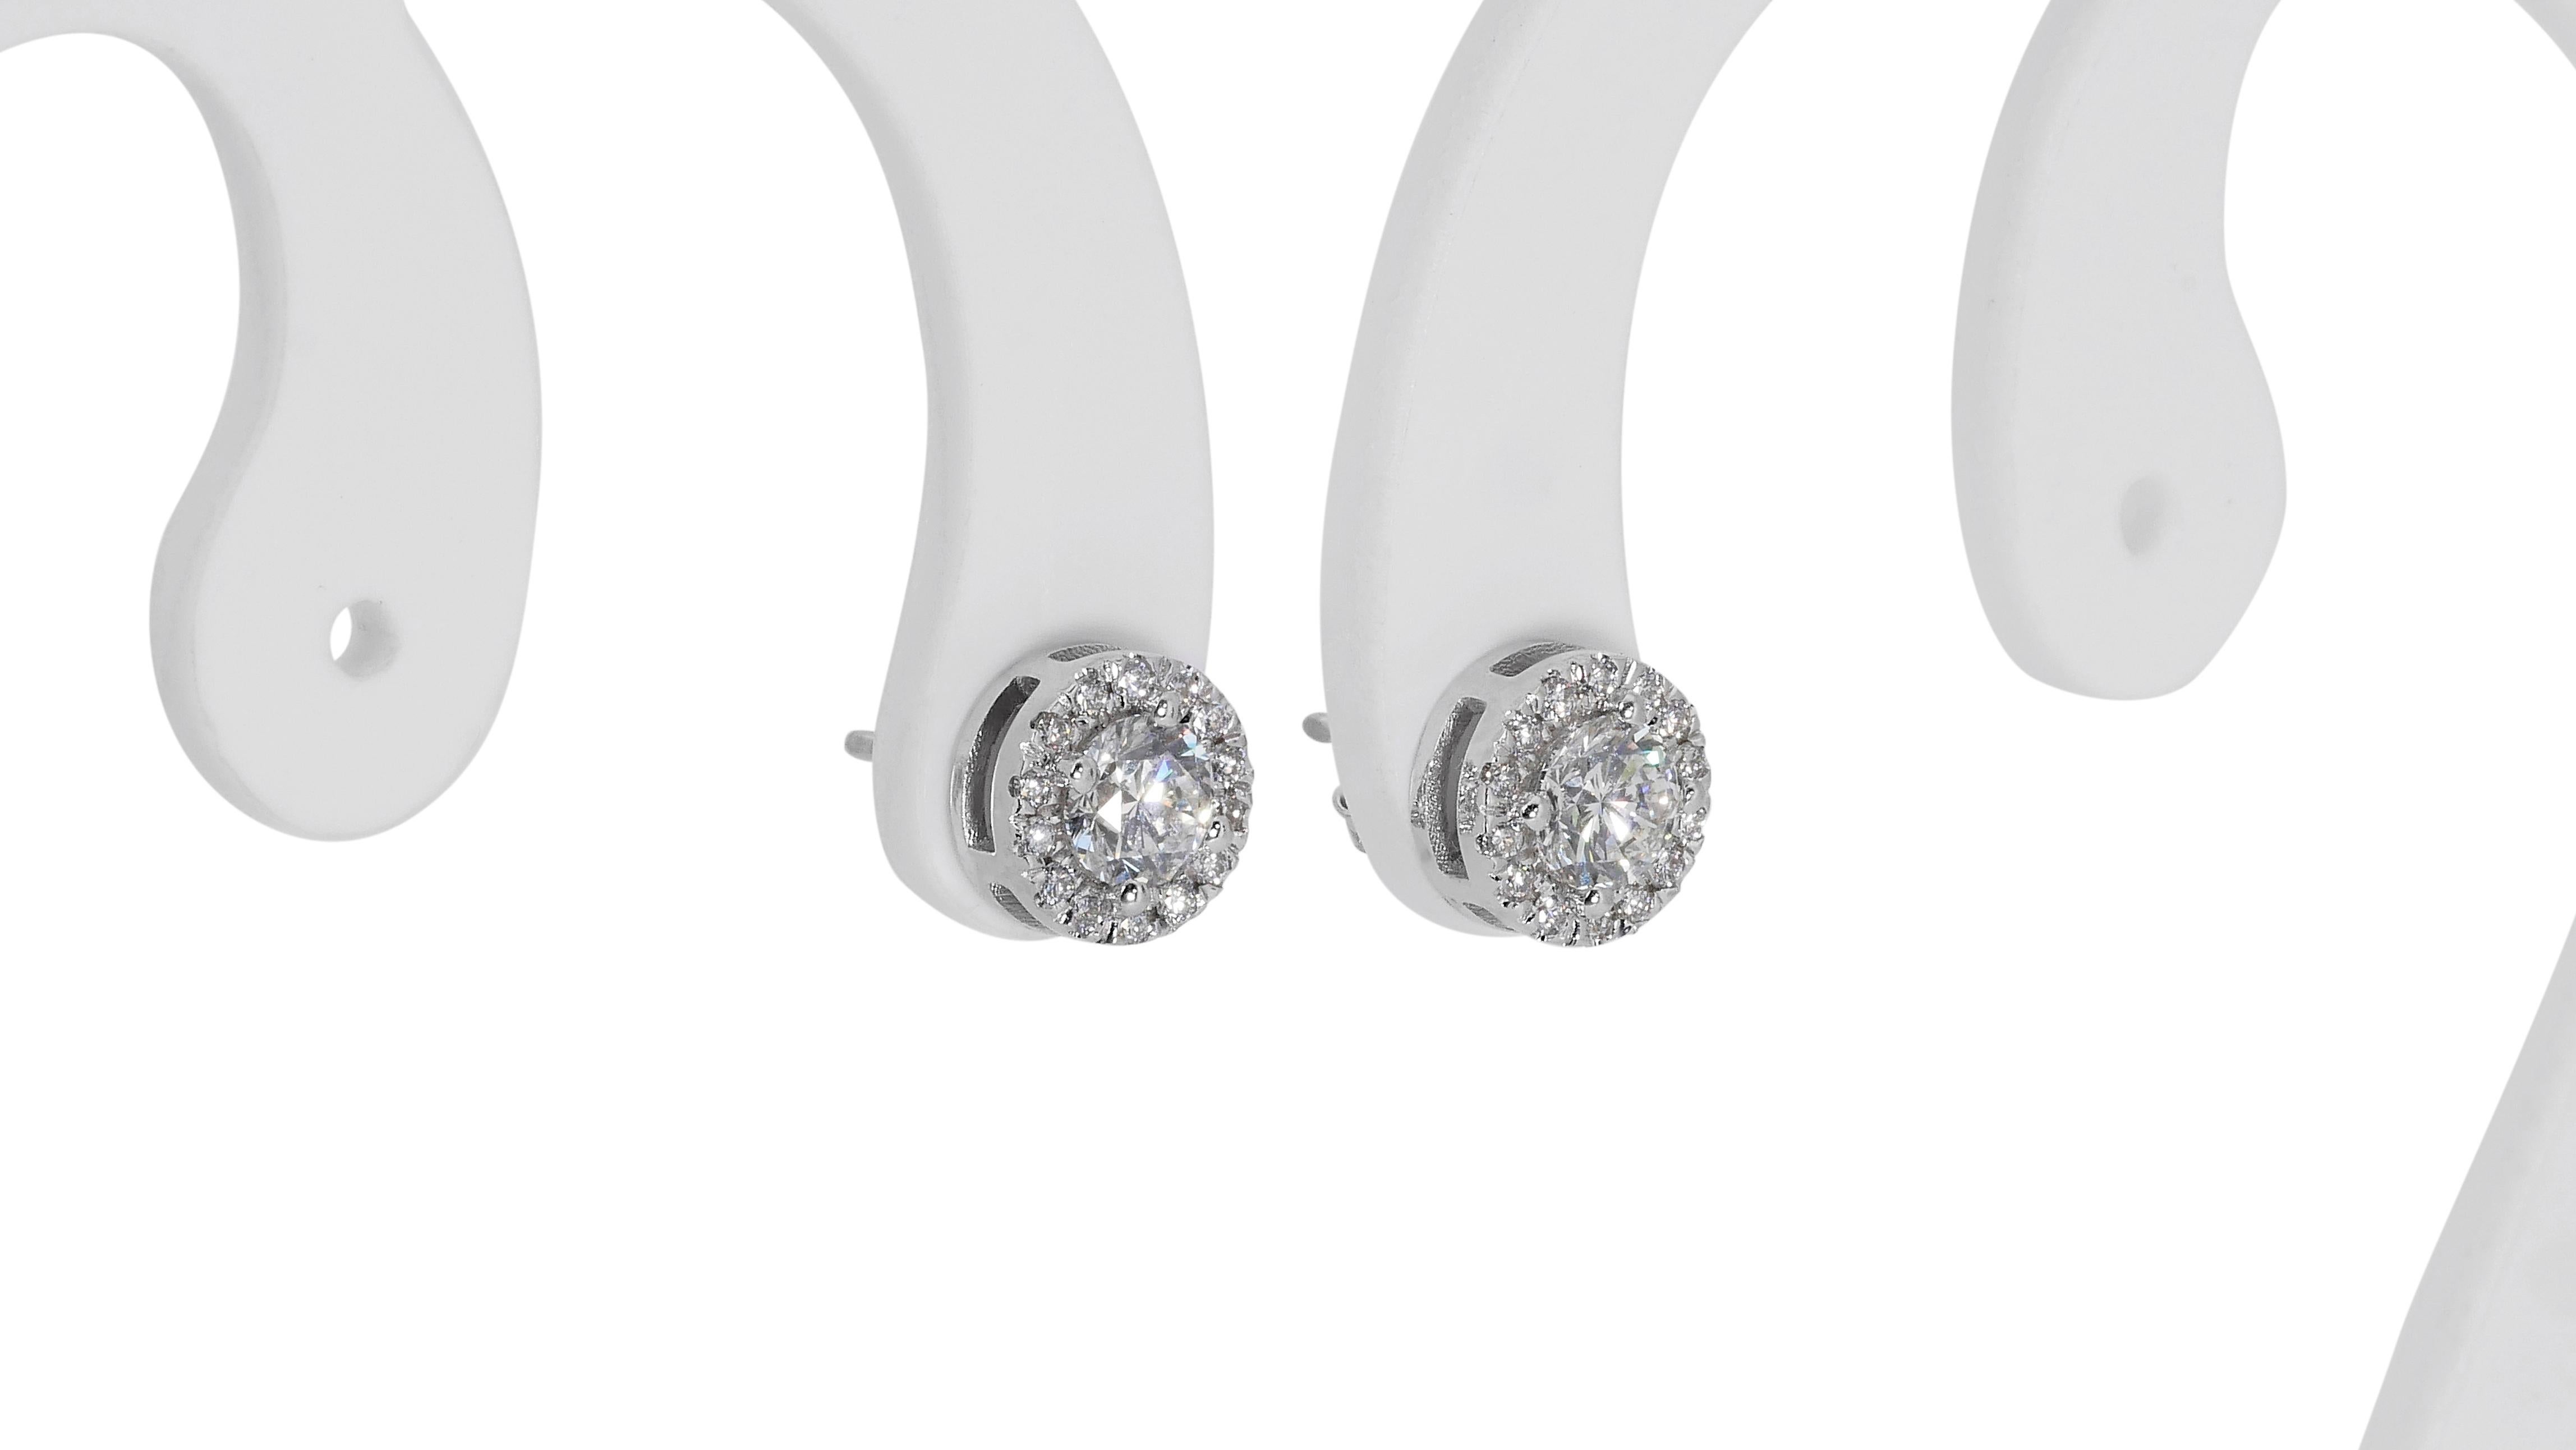 Glamorous 18k White Gold Halo Earrings w/ 1.05 Carat Natural Diamonds GIA Cert For Sale 3